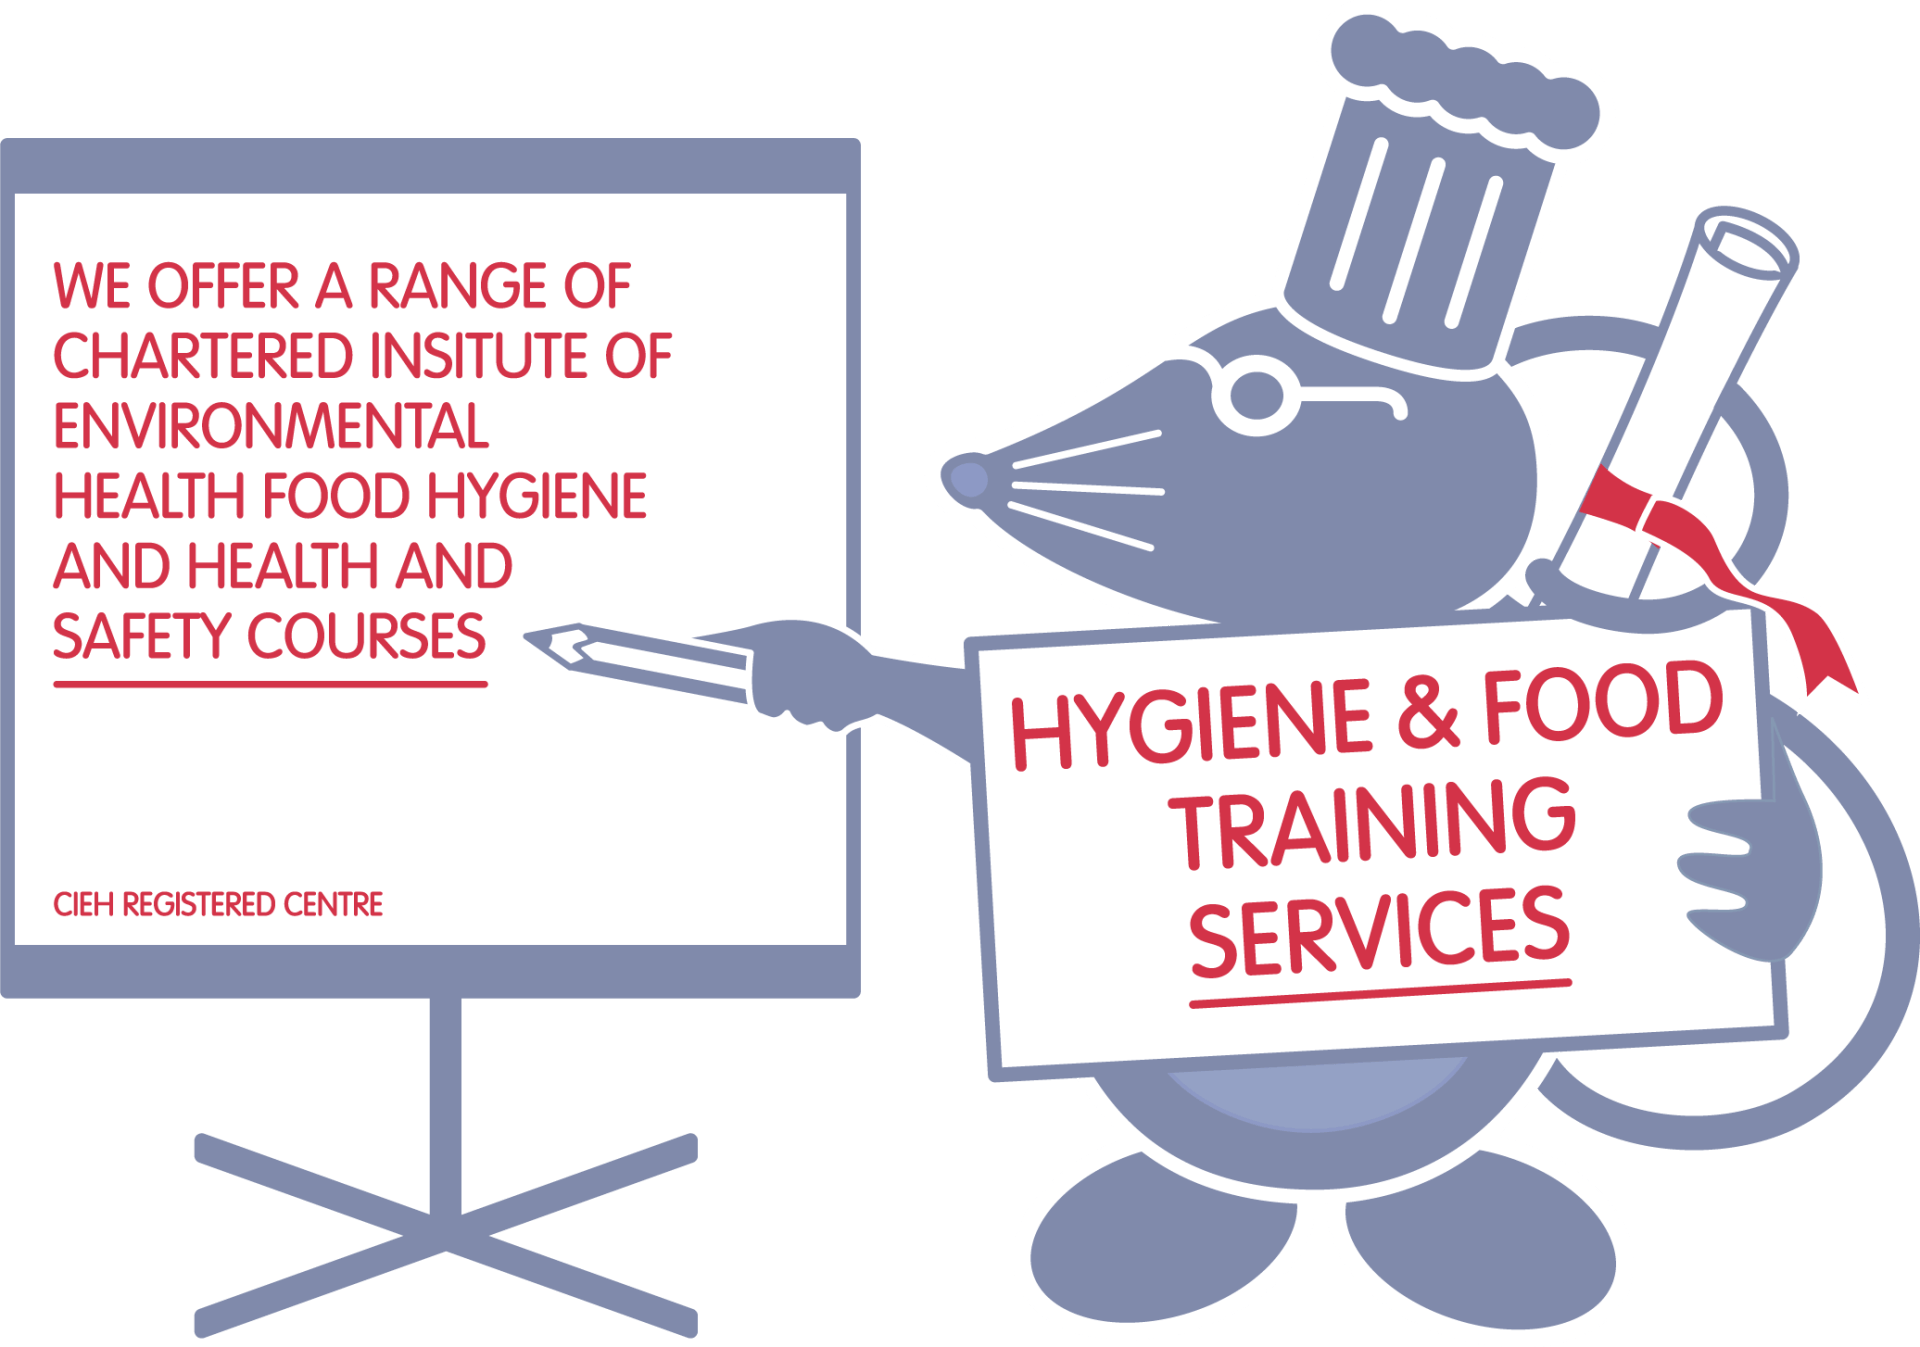 Hygiene and food training